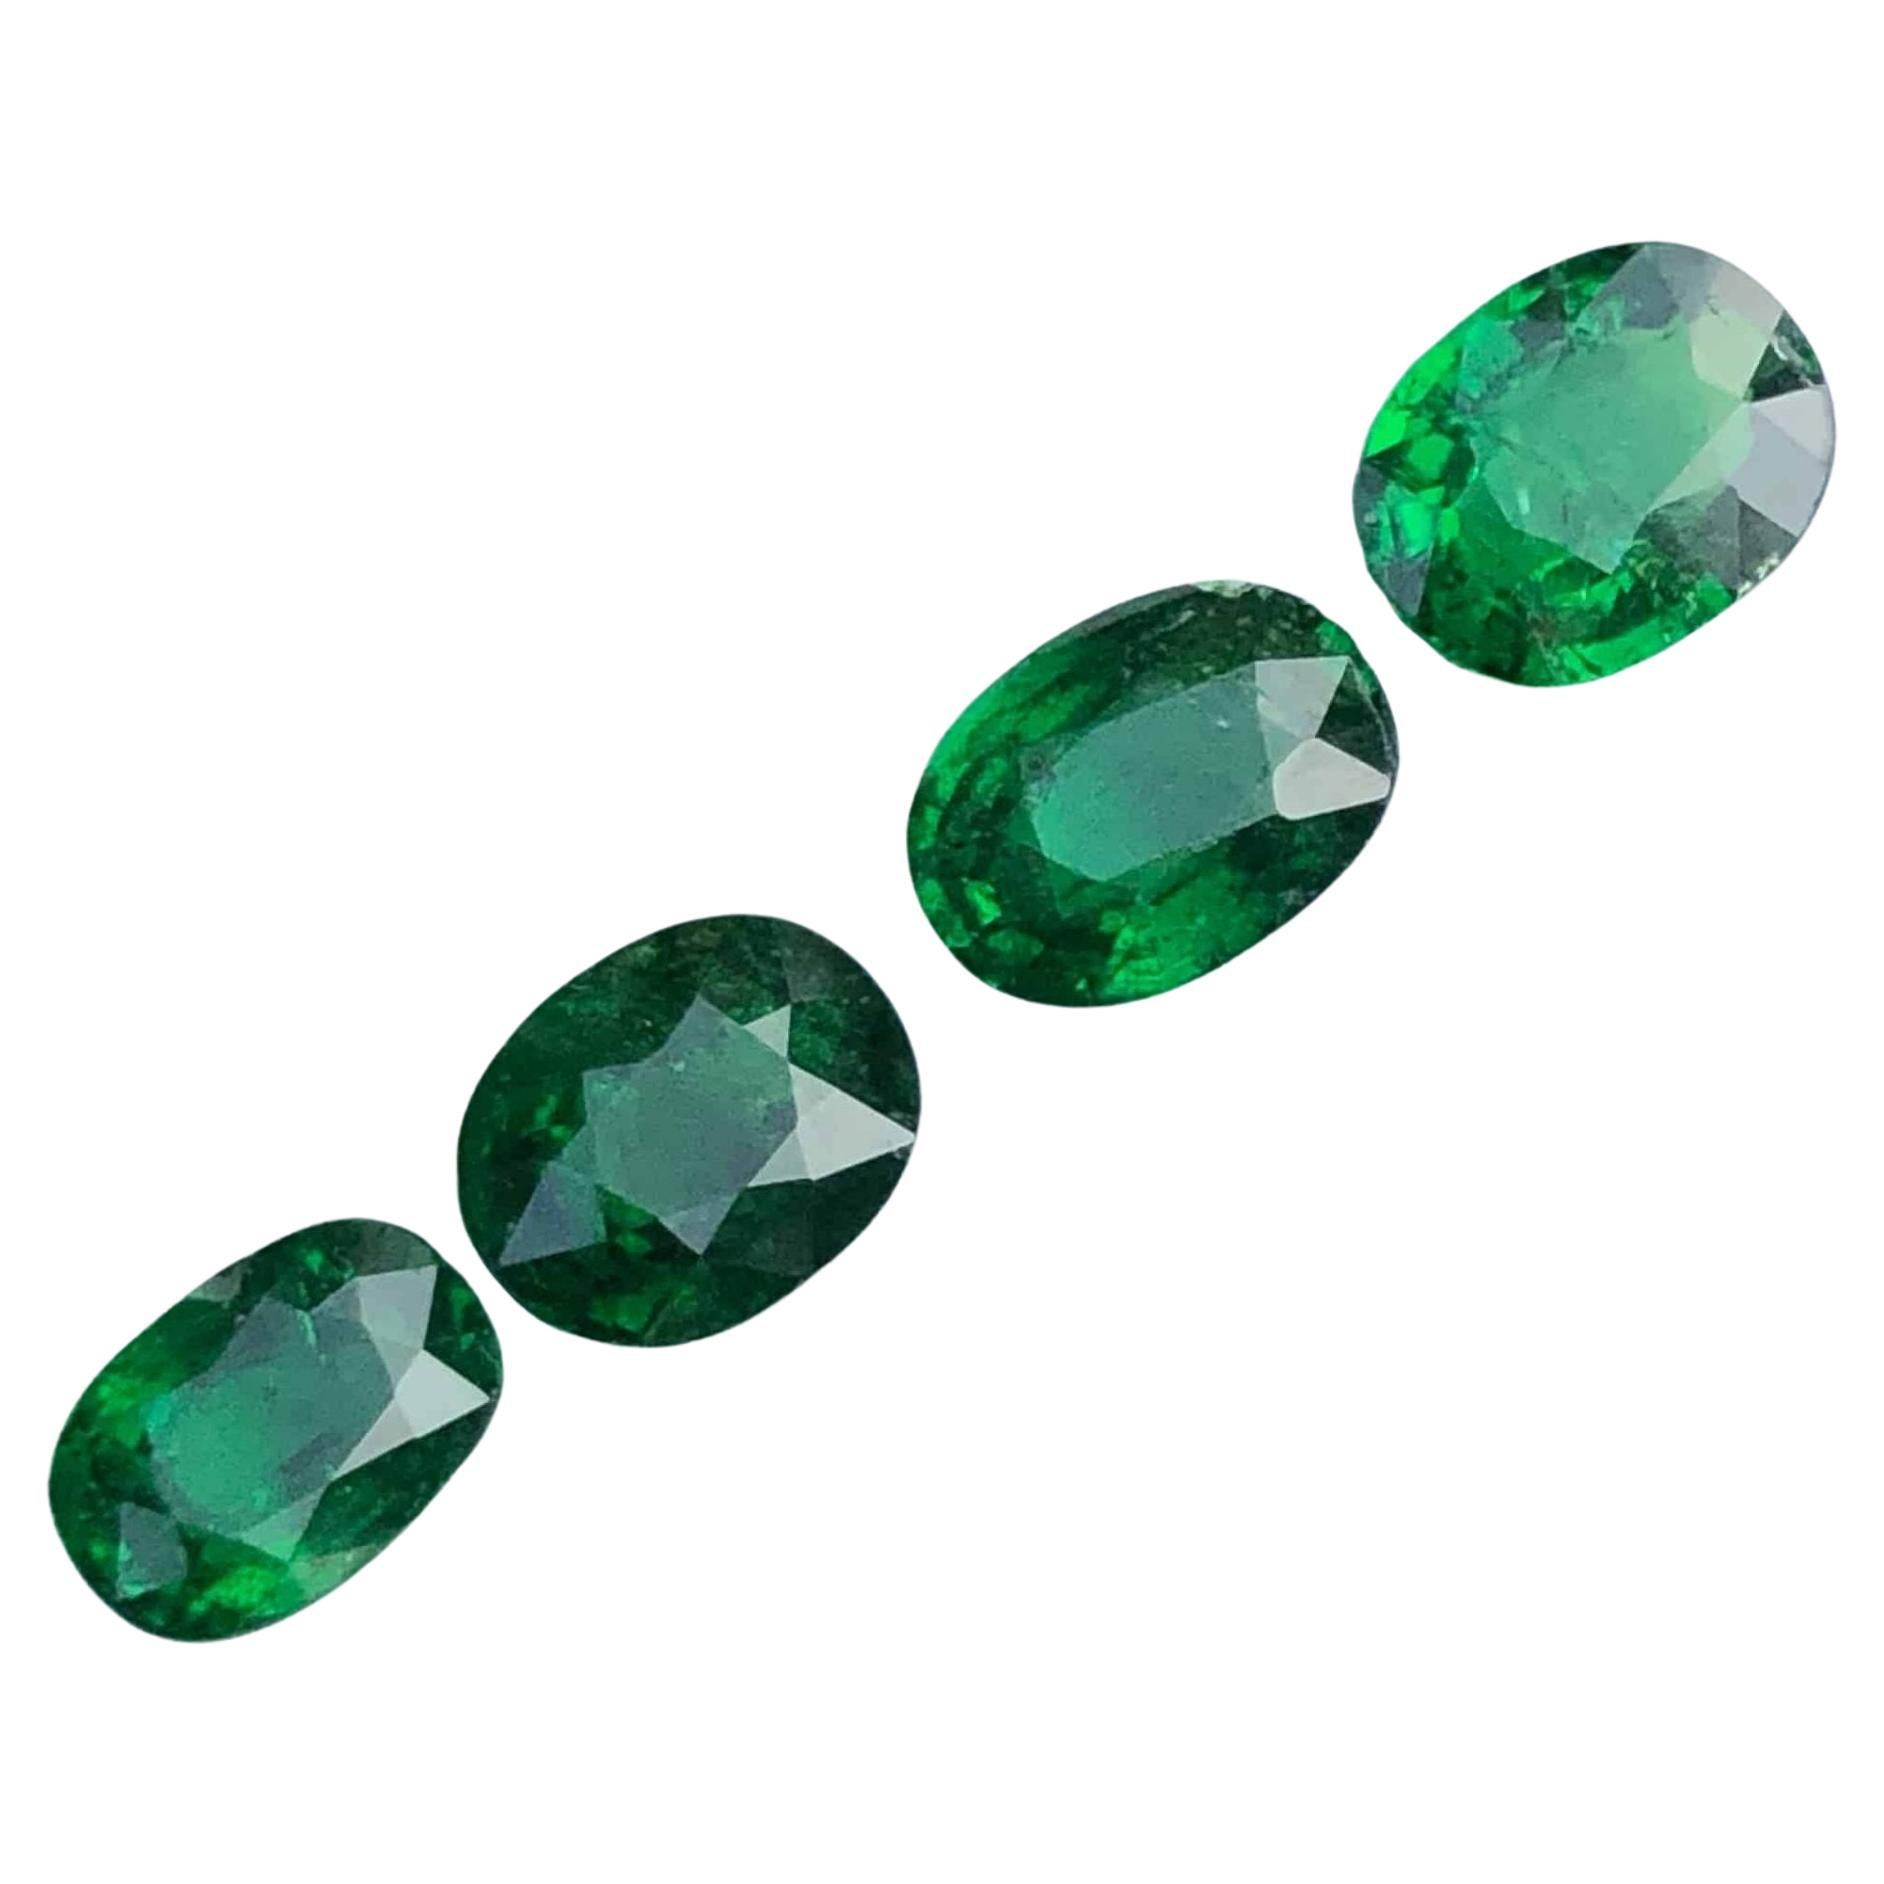 5.60 Carats Natural Tsavorite Green Garnet Set Loose Gemstones From Kenya